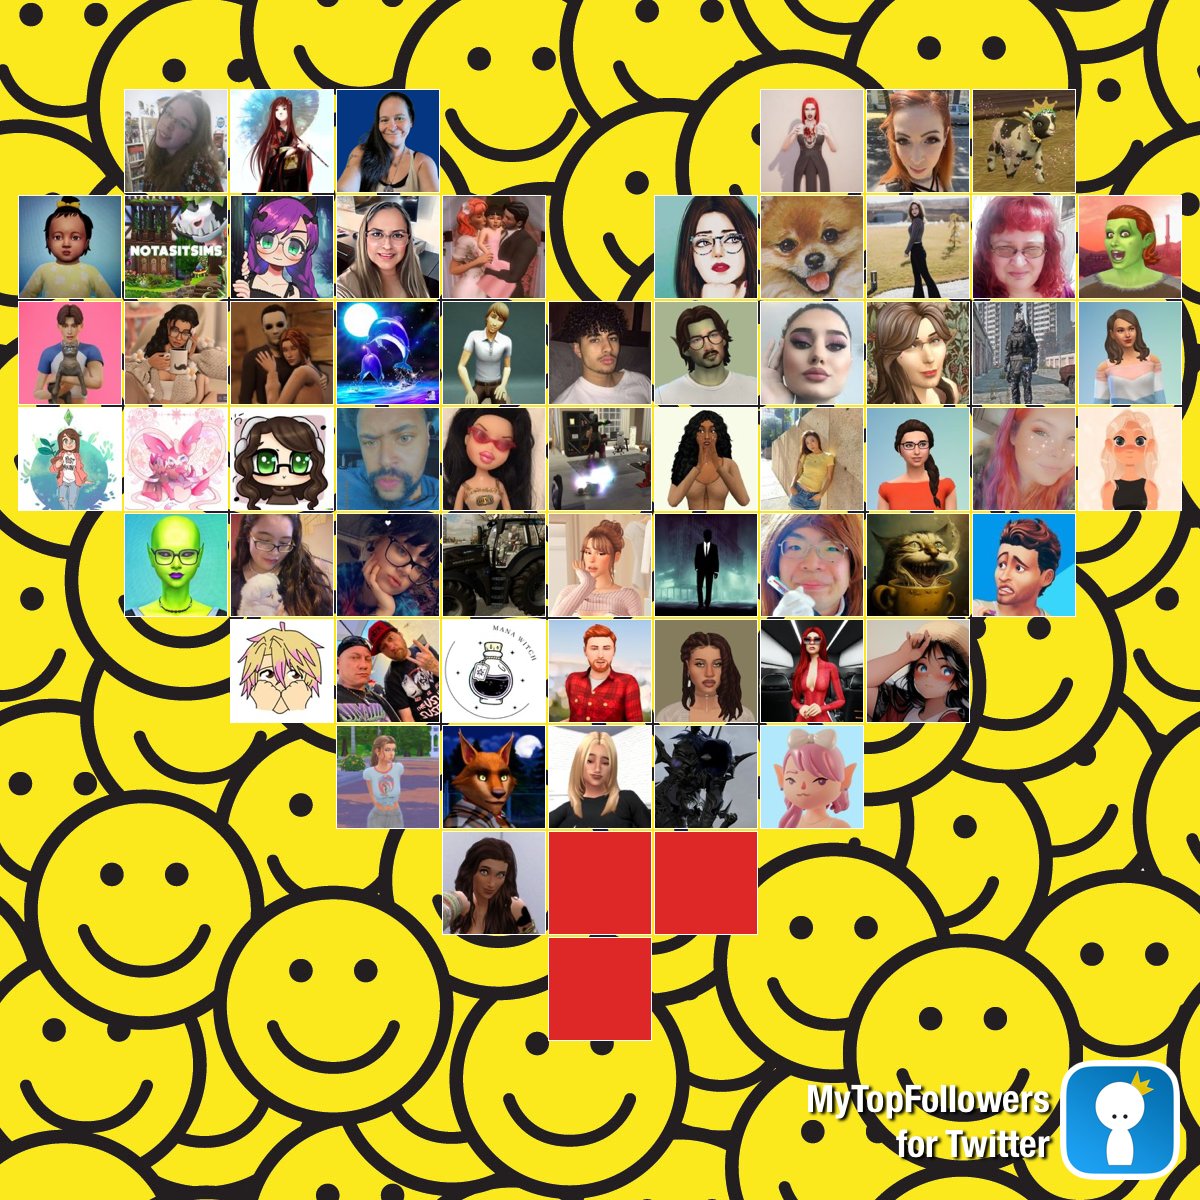 My top amazing fans #mytopfollowers #EmojiDay via dixapp.com/mytopfollowers… Retweet if you see yourself @MetaniteTV @zoeytheshadow @HeraldSims @SimmerObsess @KirstyCurse @BiBeeWithTea1 @Benquisha20 @notasitsims @Dellatrix0 @sonstar_simmer